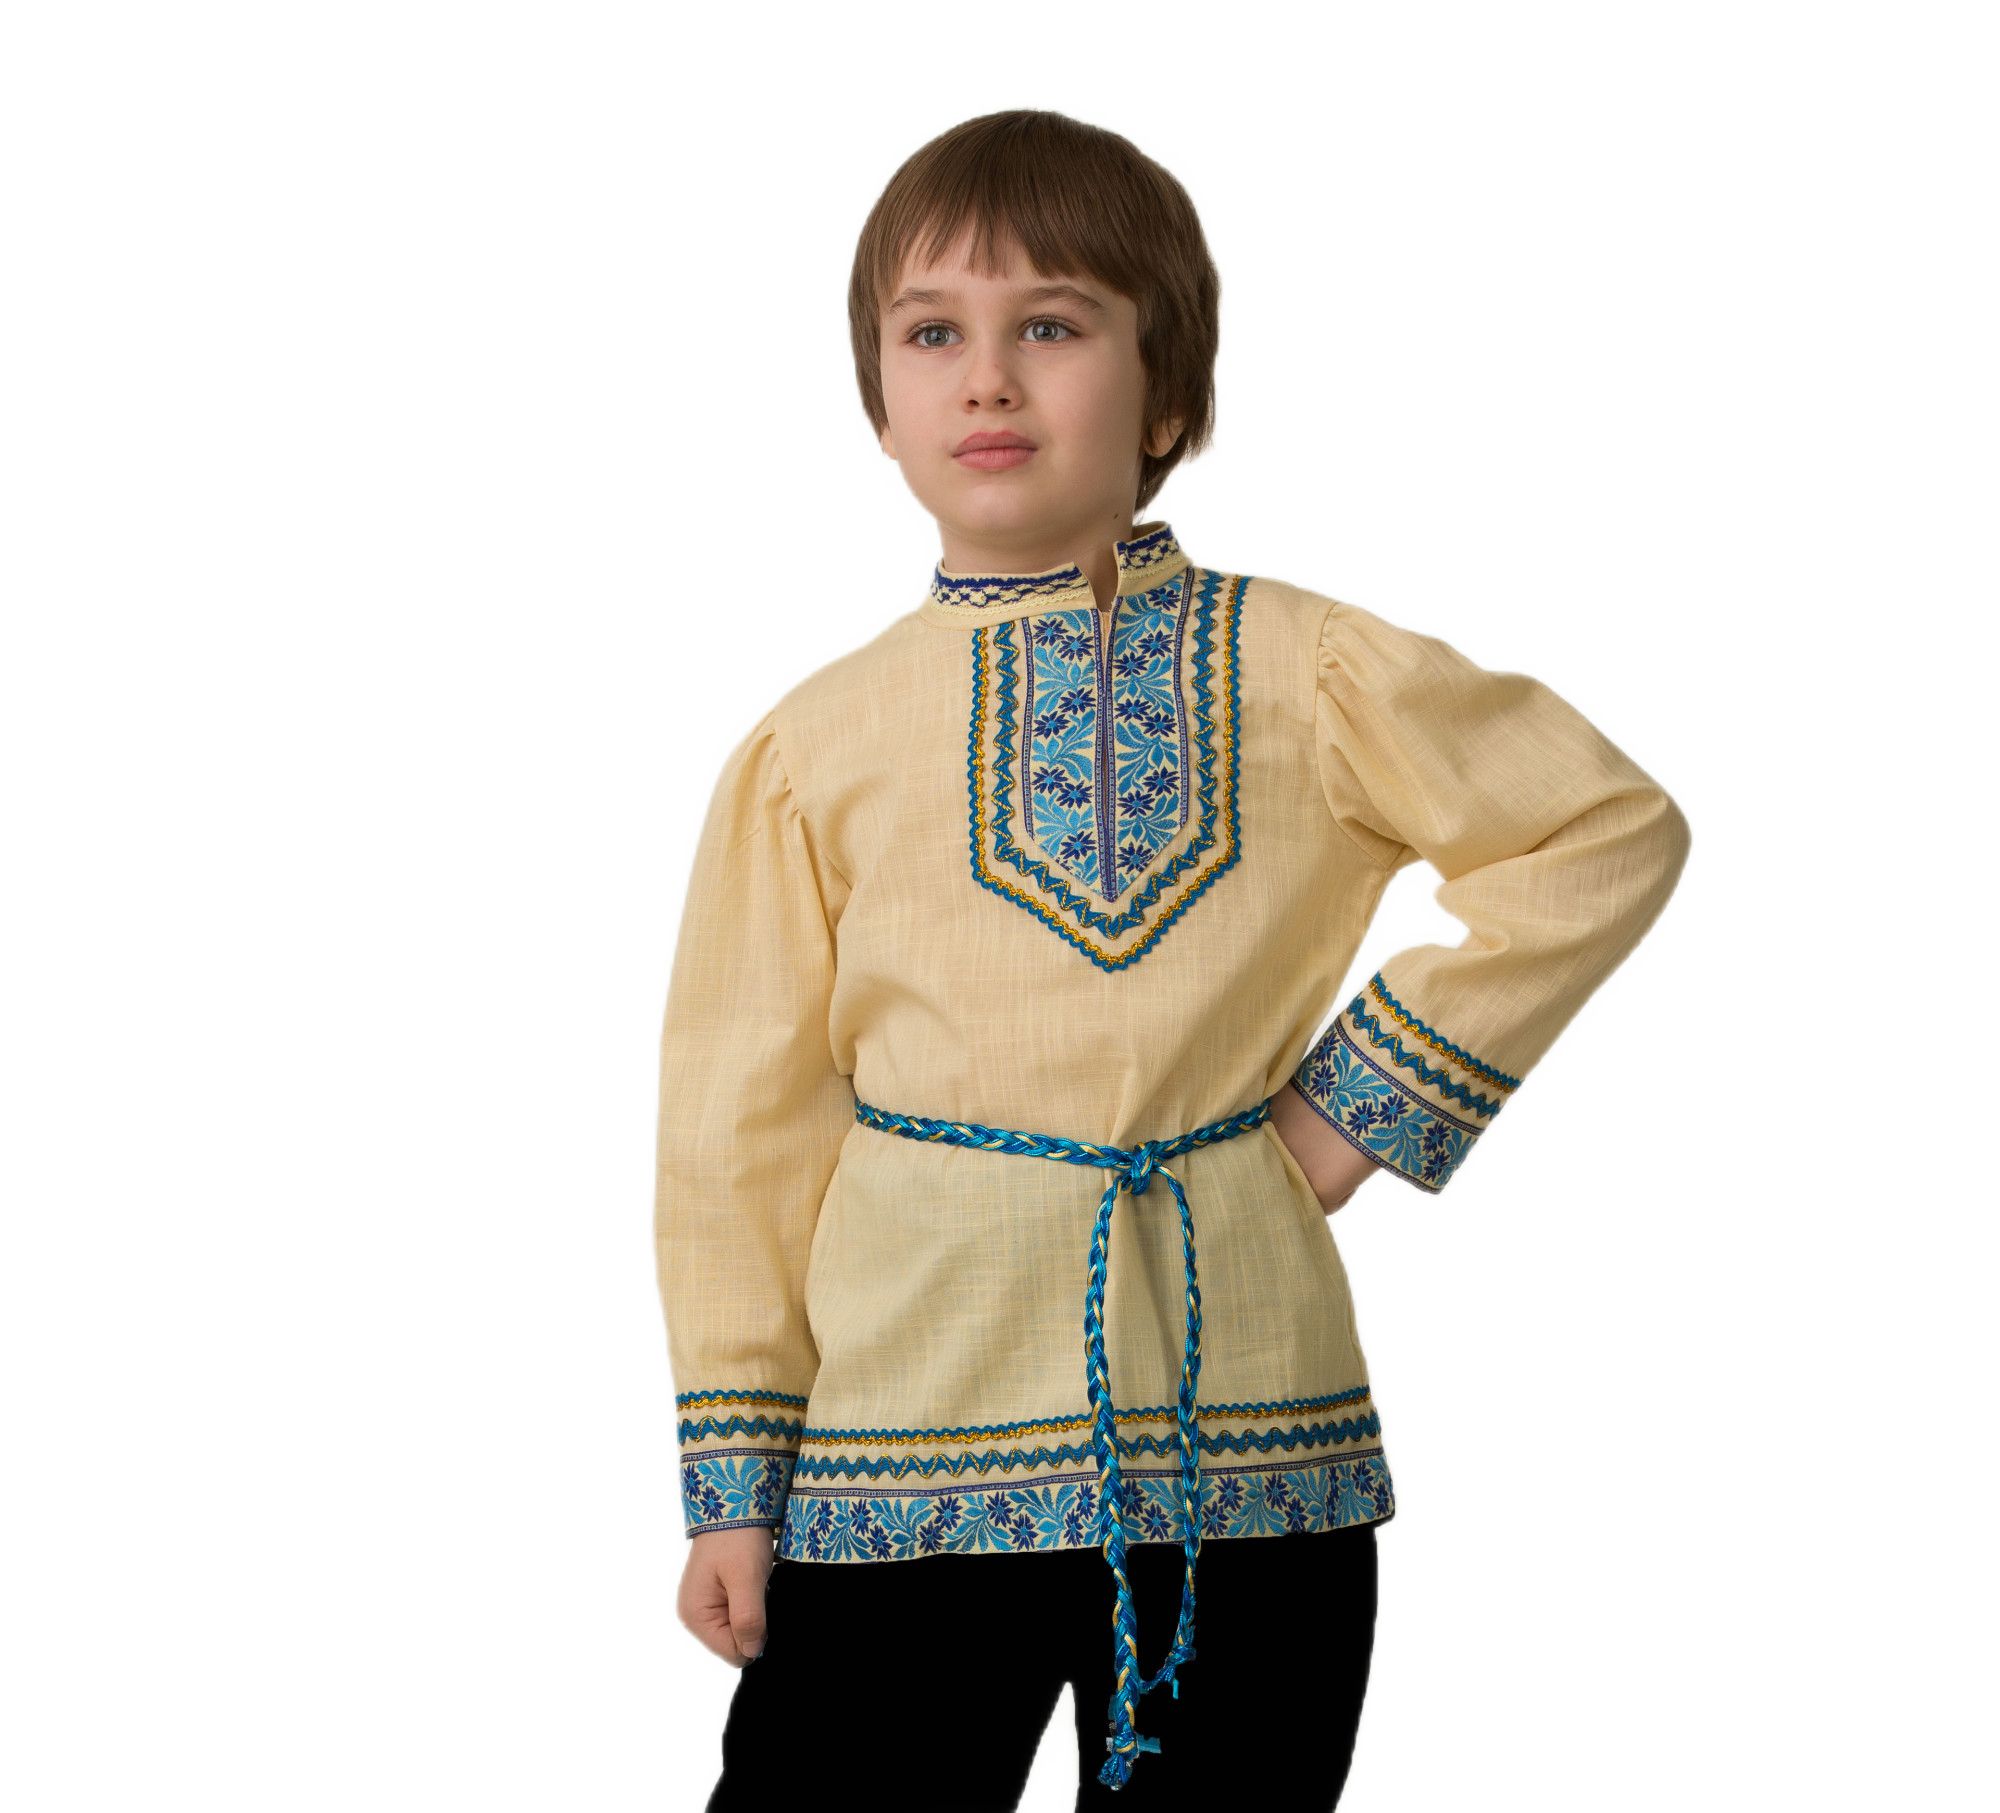 фото Рубашка вышиванка jeanees батик народный костюм, арт. 5605-1, размер: 140-68